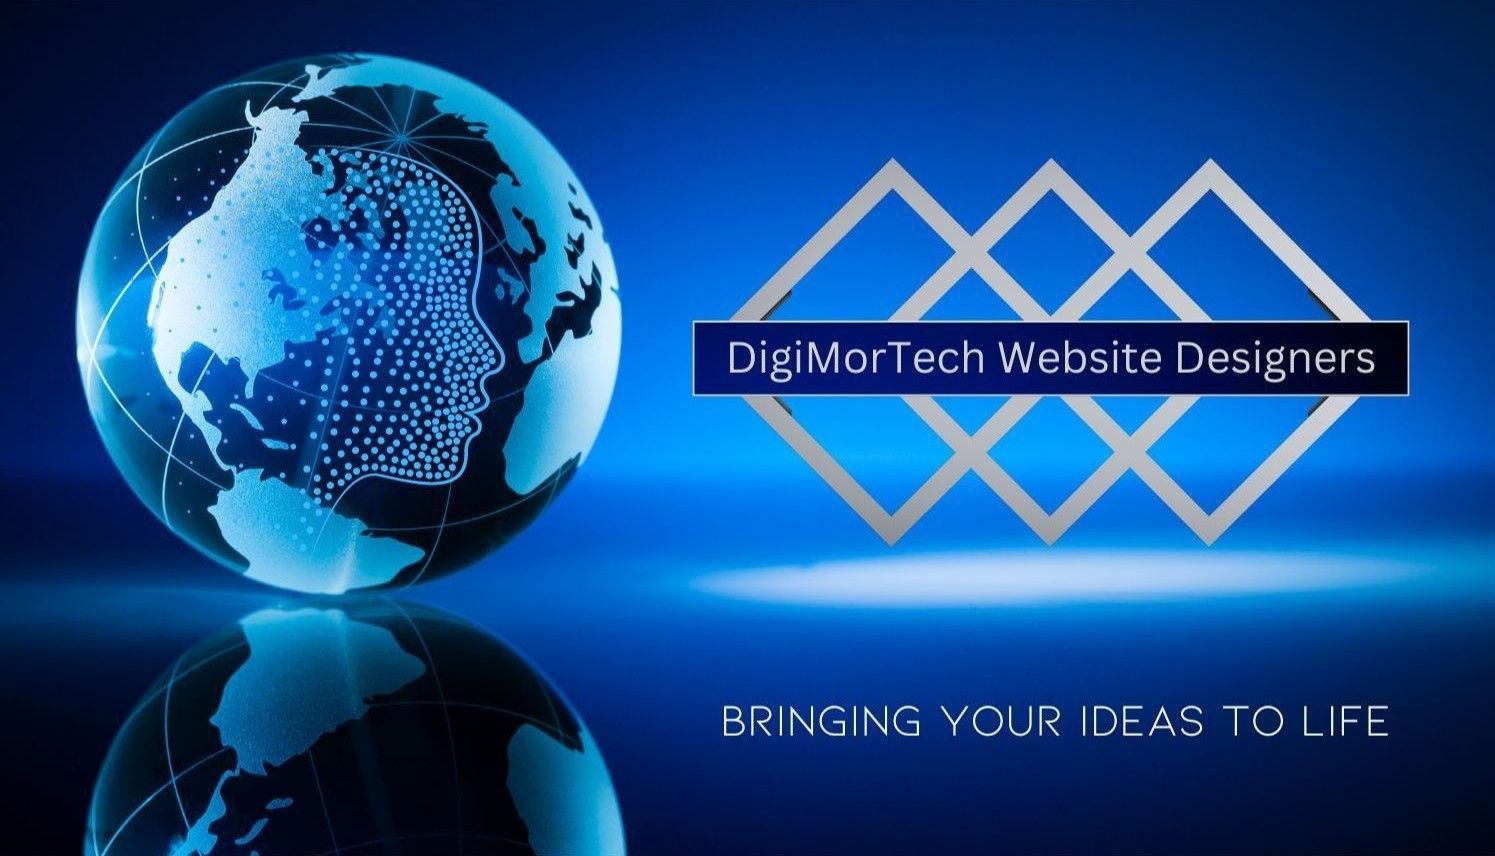 DigiMorTech Website Designers